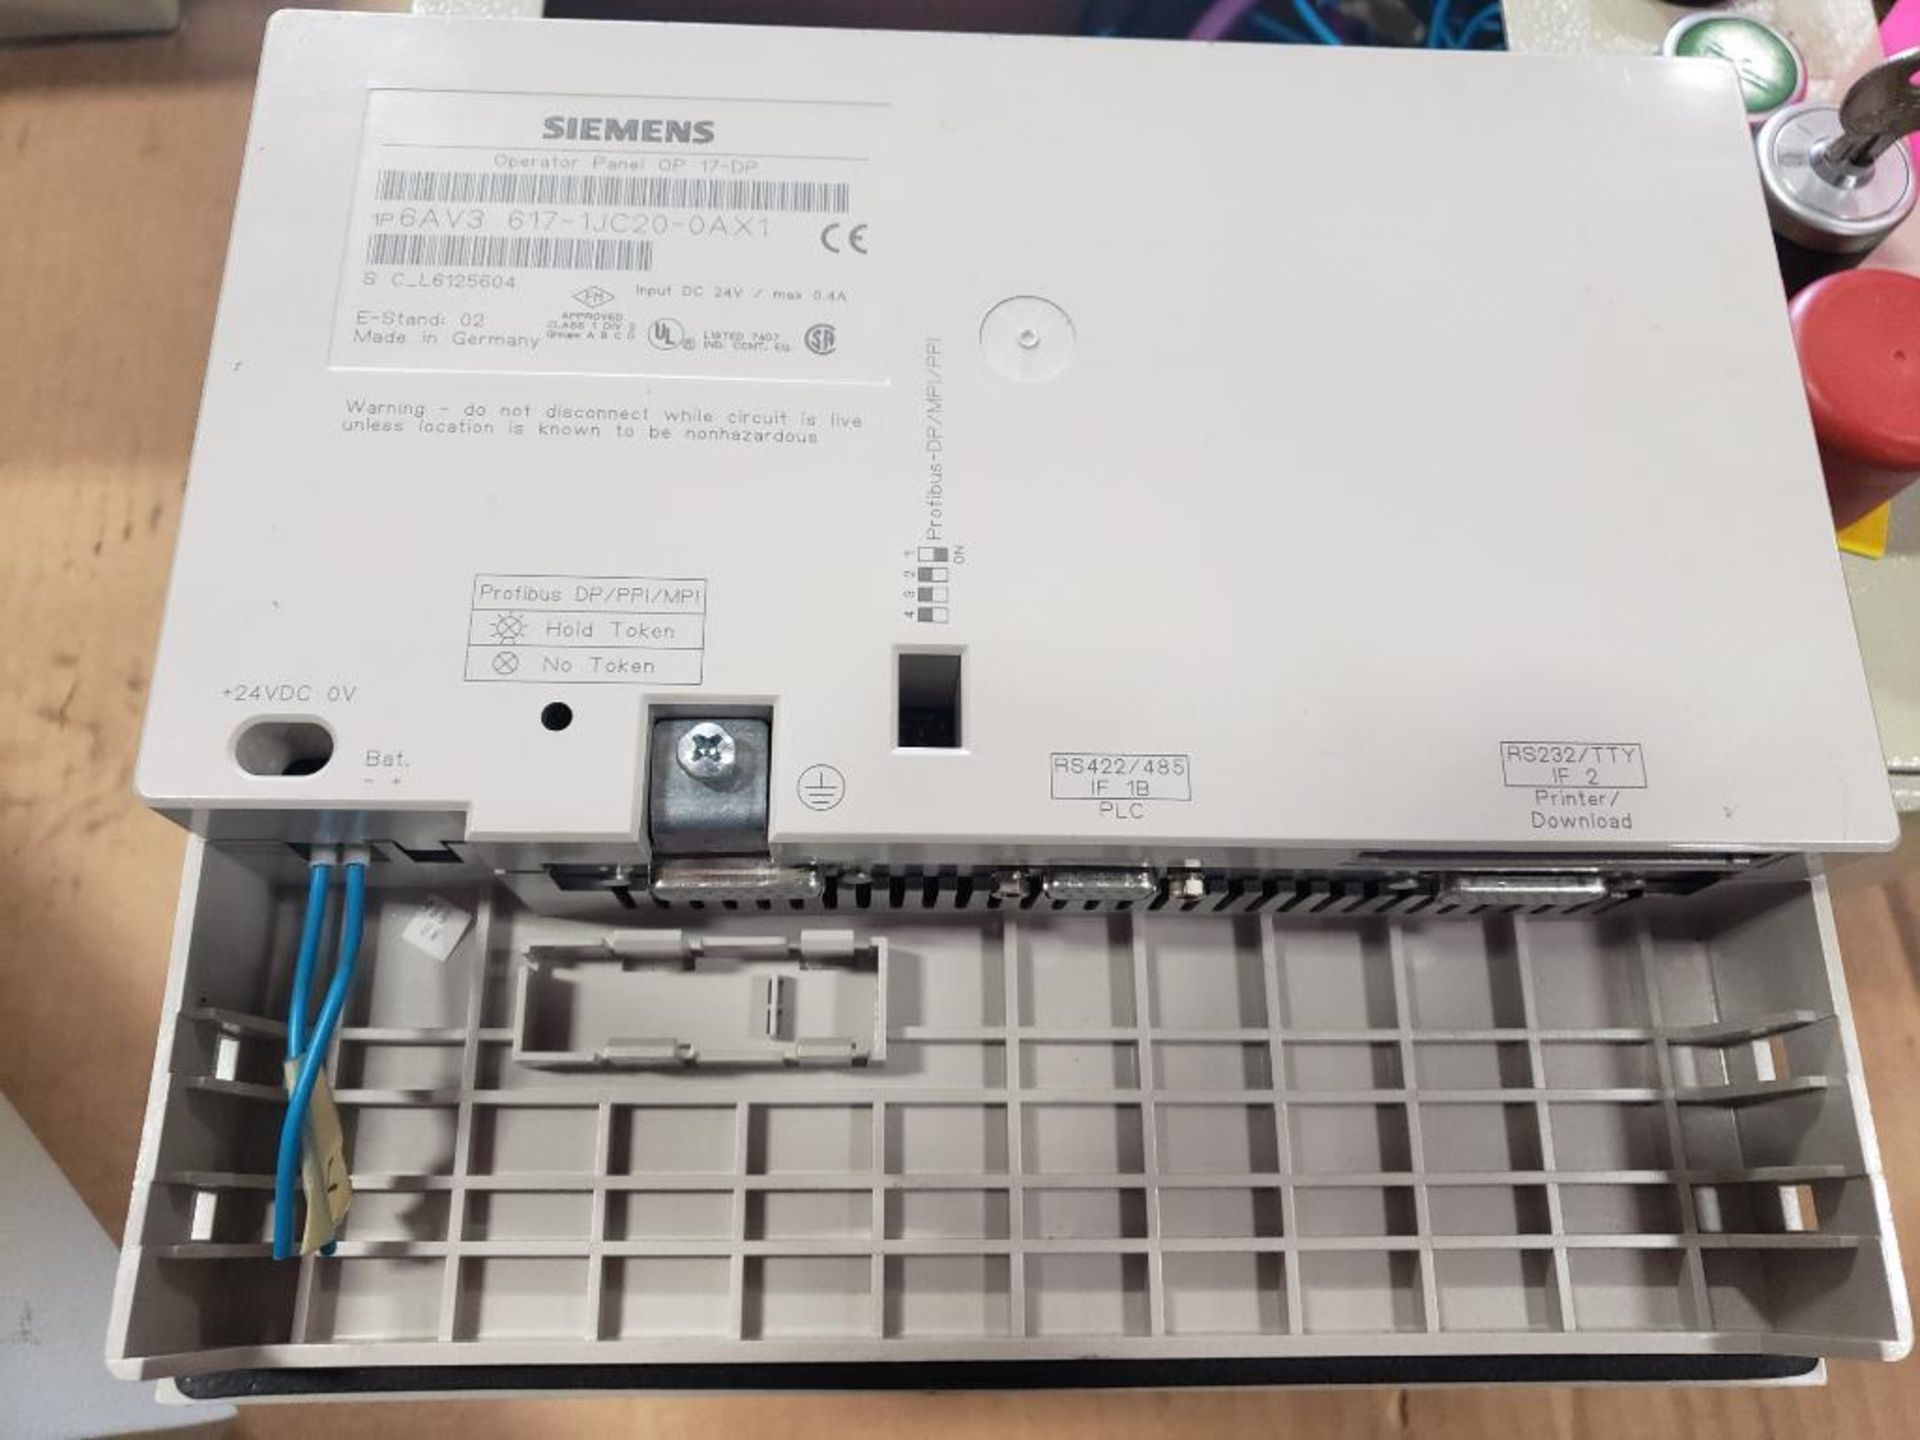 Siemens Operator Panel OP 17-DP. 1P 6AV3 617-1JC20-0AX1 machine control box. - Image 4 of 5